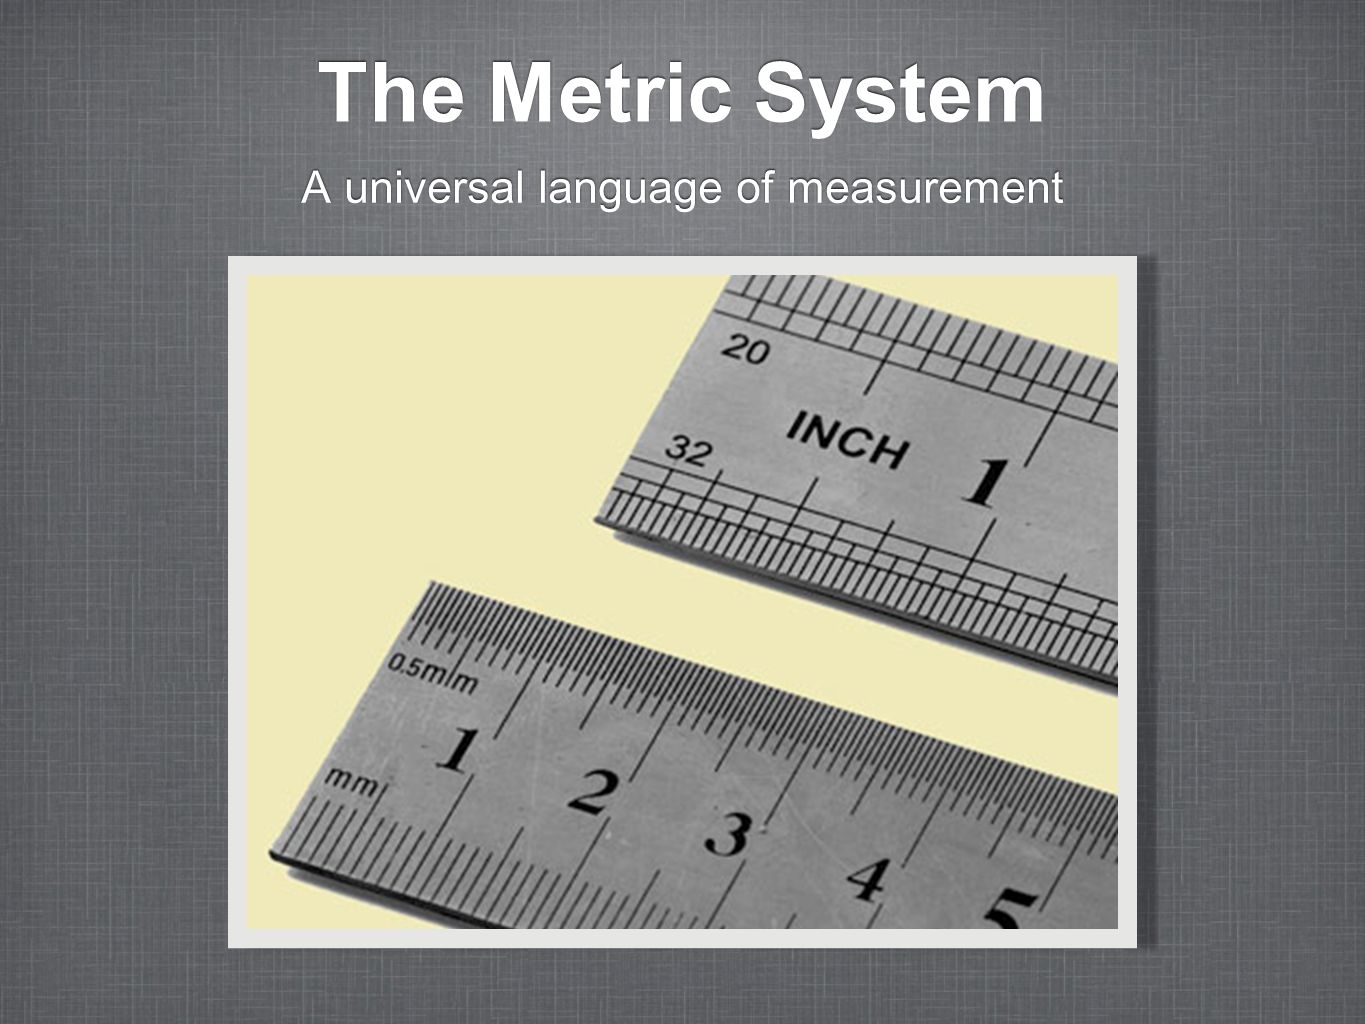 A universal language of measurement